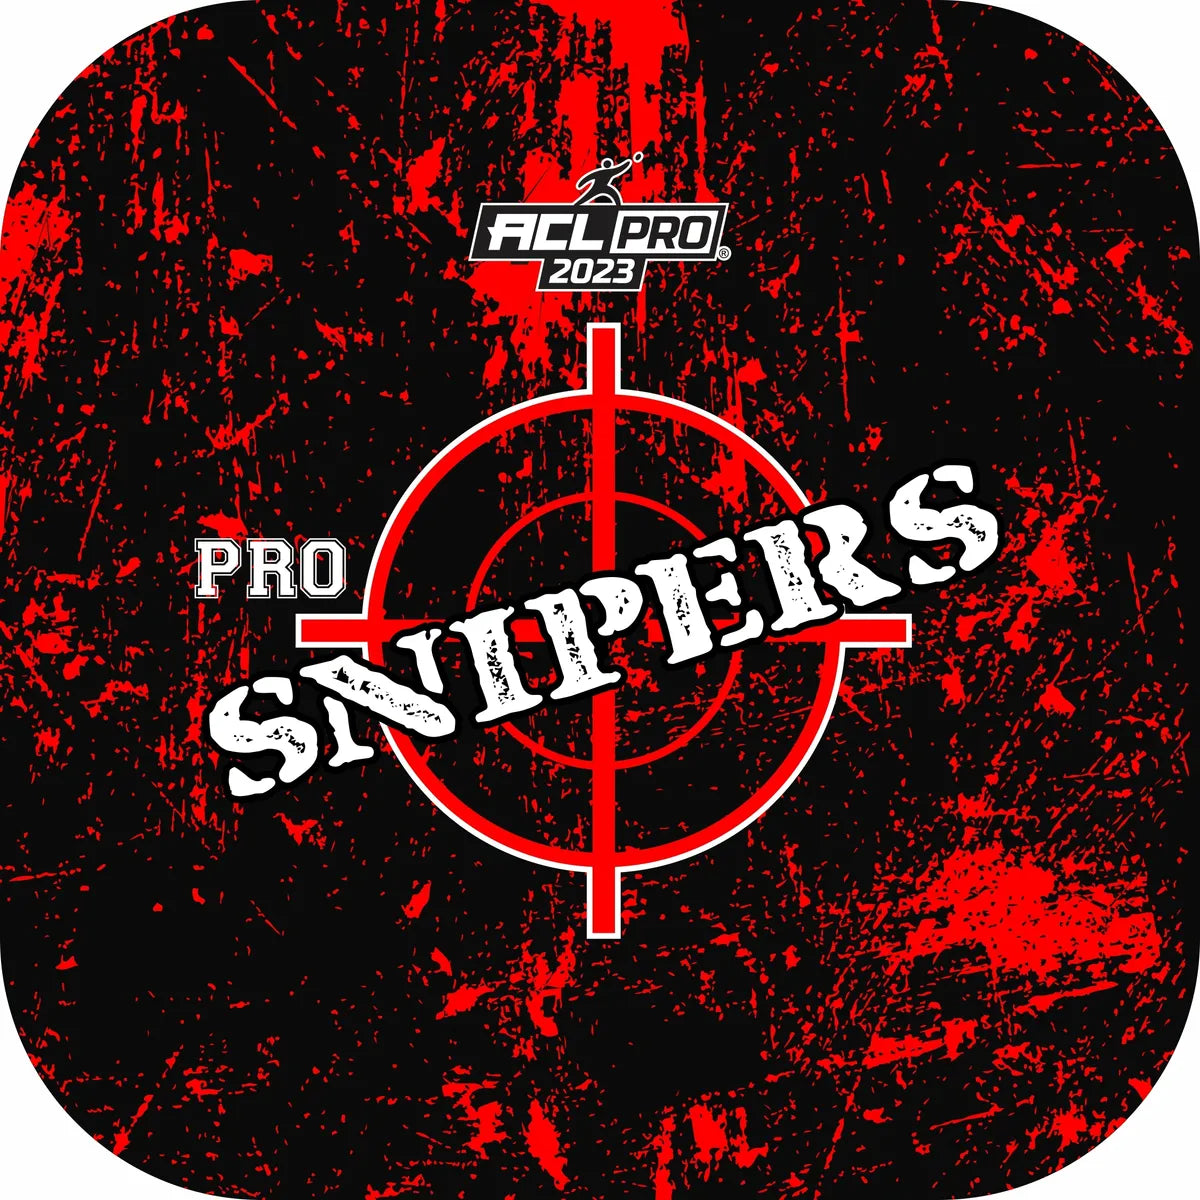 Lucky Bags Cornhole Pro Sniper - Scratch Series